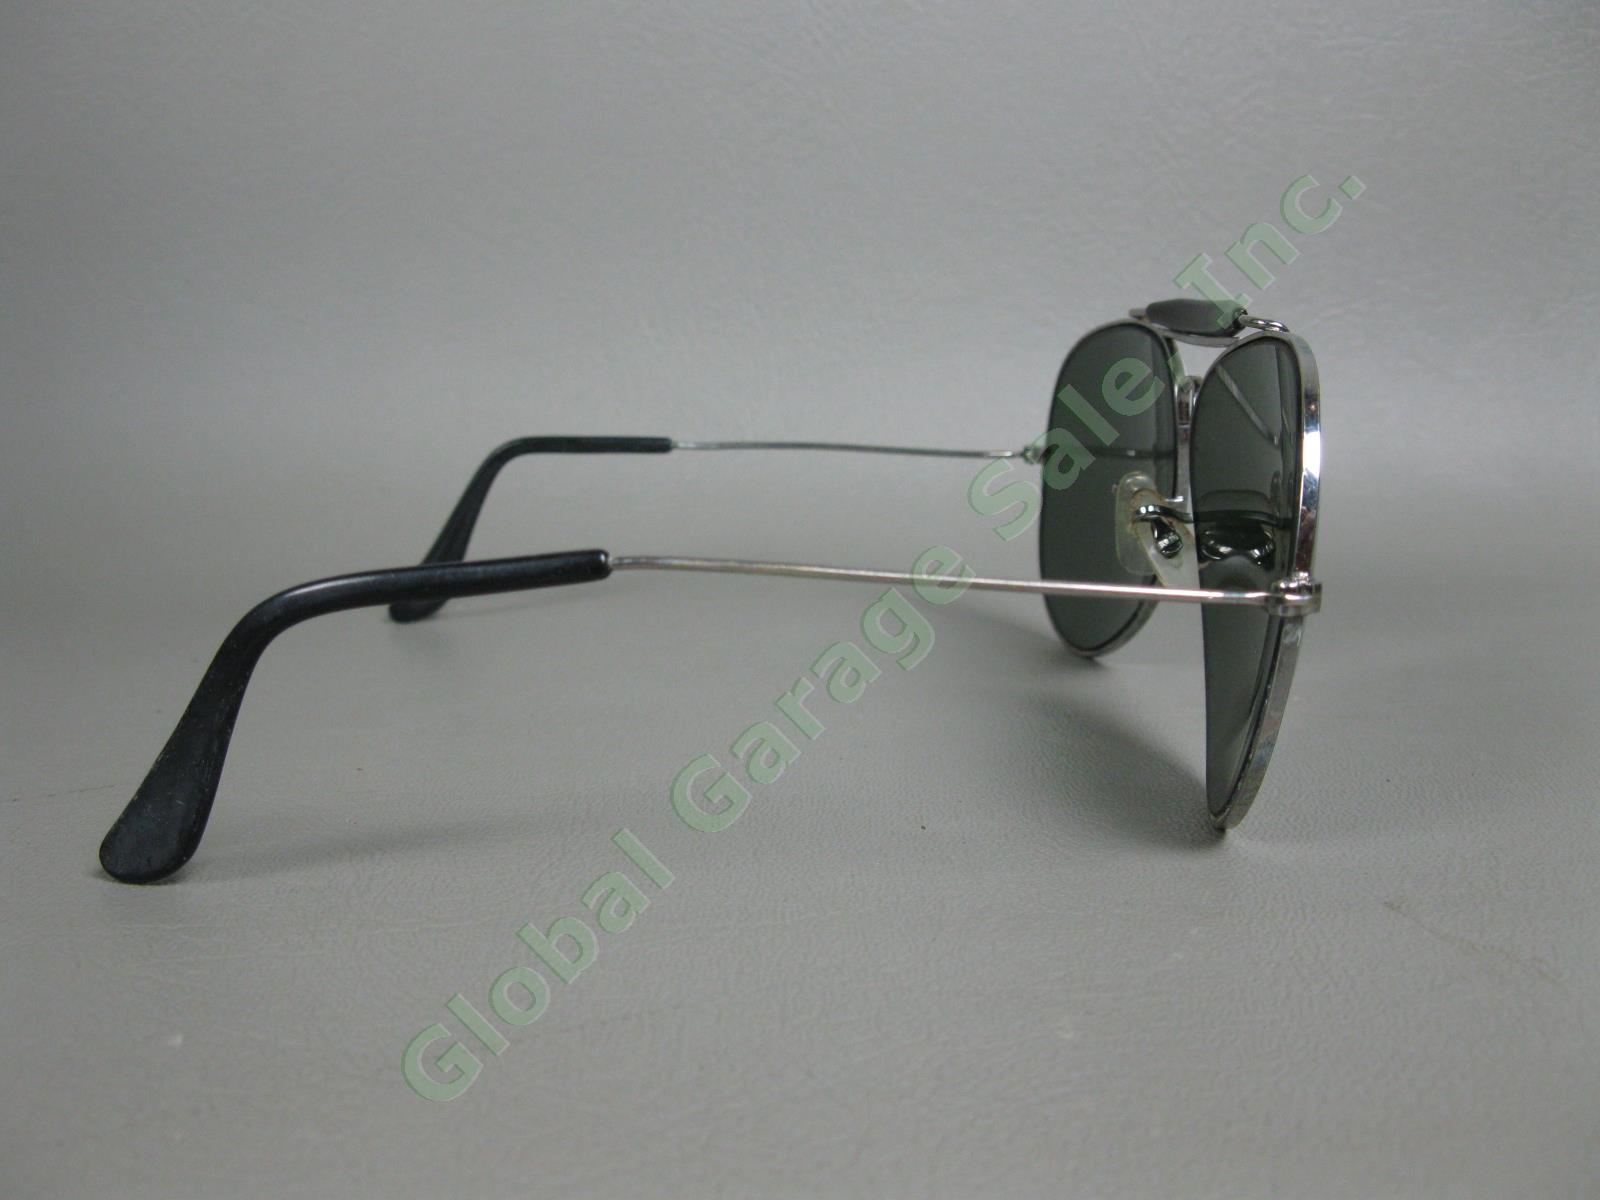 Vtg Bausch + Lomb Ray-Ban Large Aviator Sunglasses 62-14 Green Lenses w/ Case 2